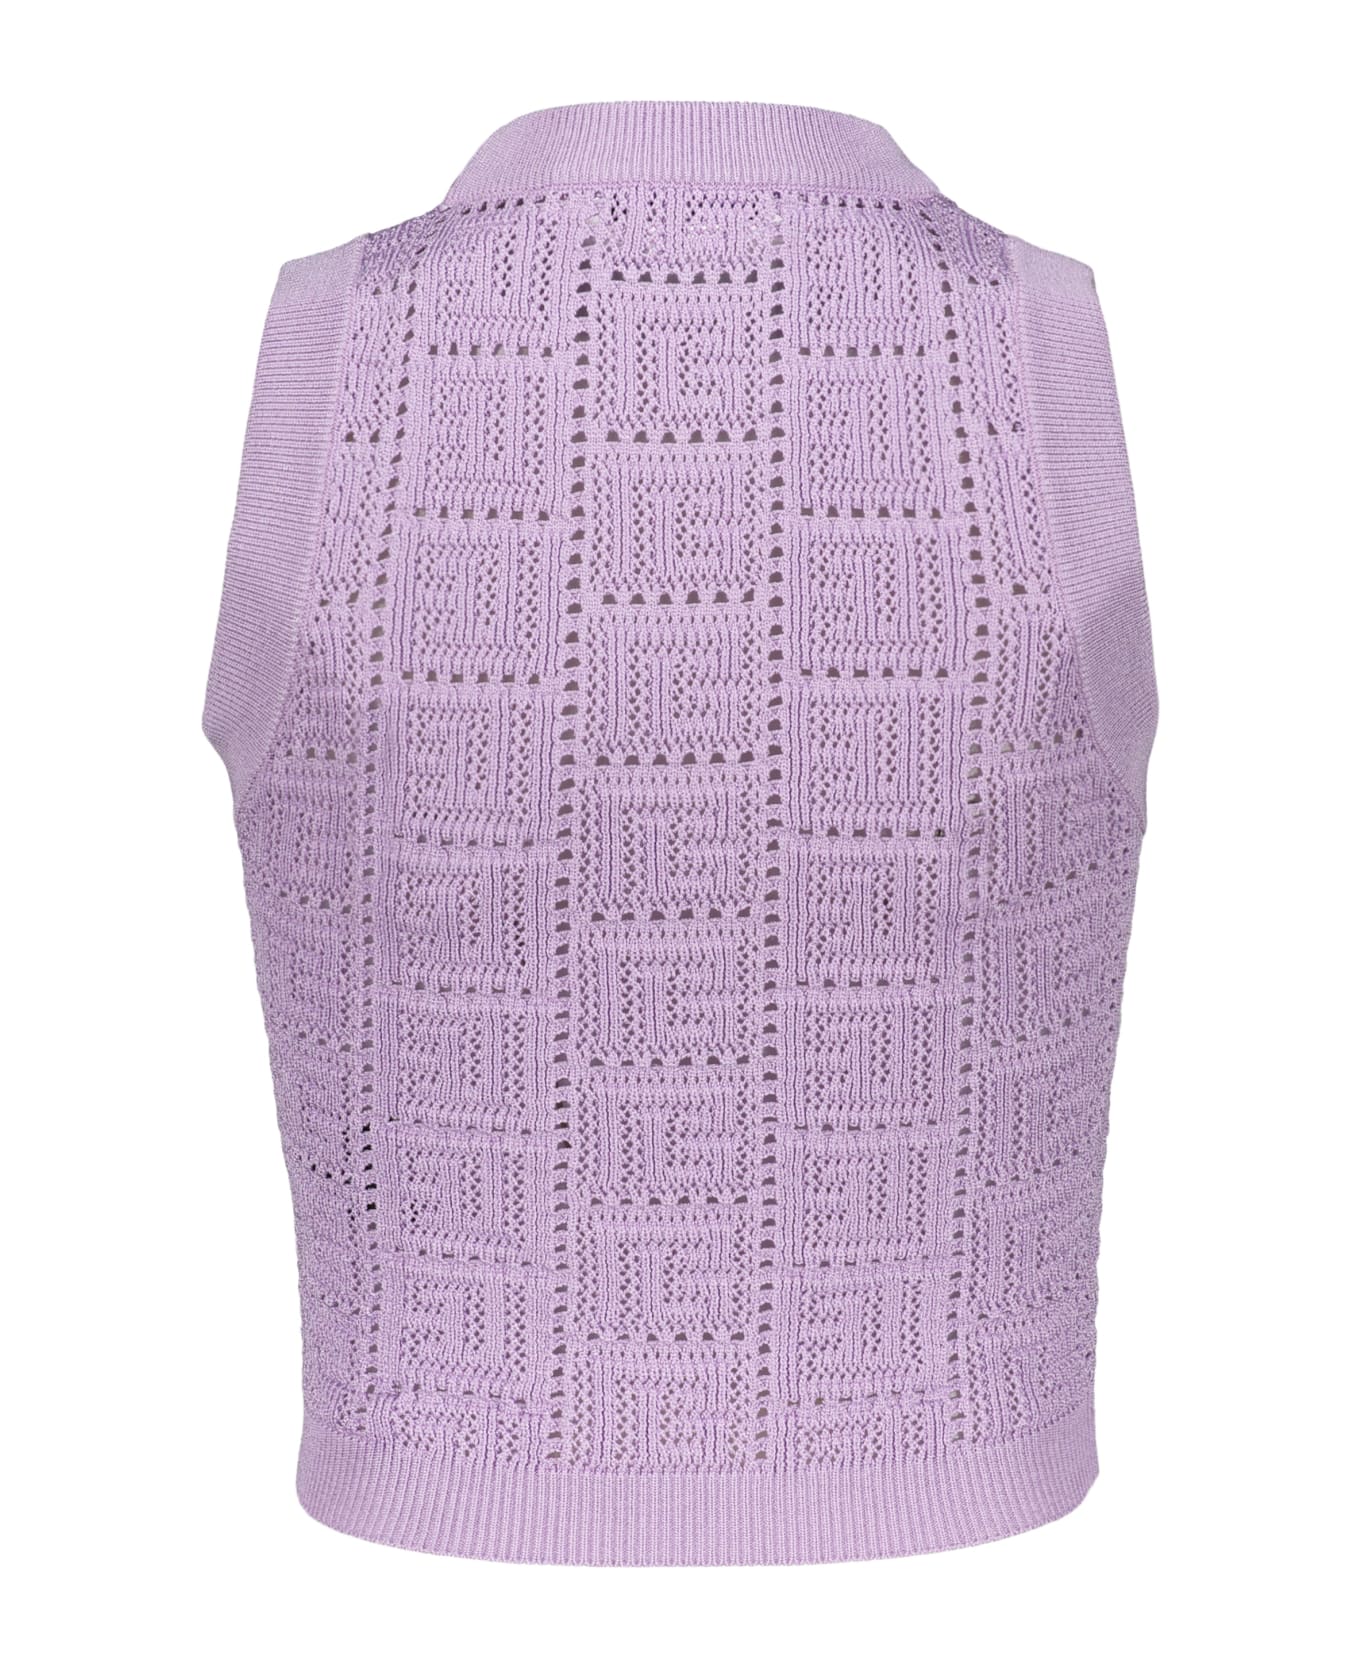 Balmain Knitted Viscosa-blend Top - Lilac